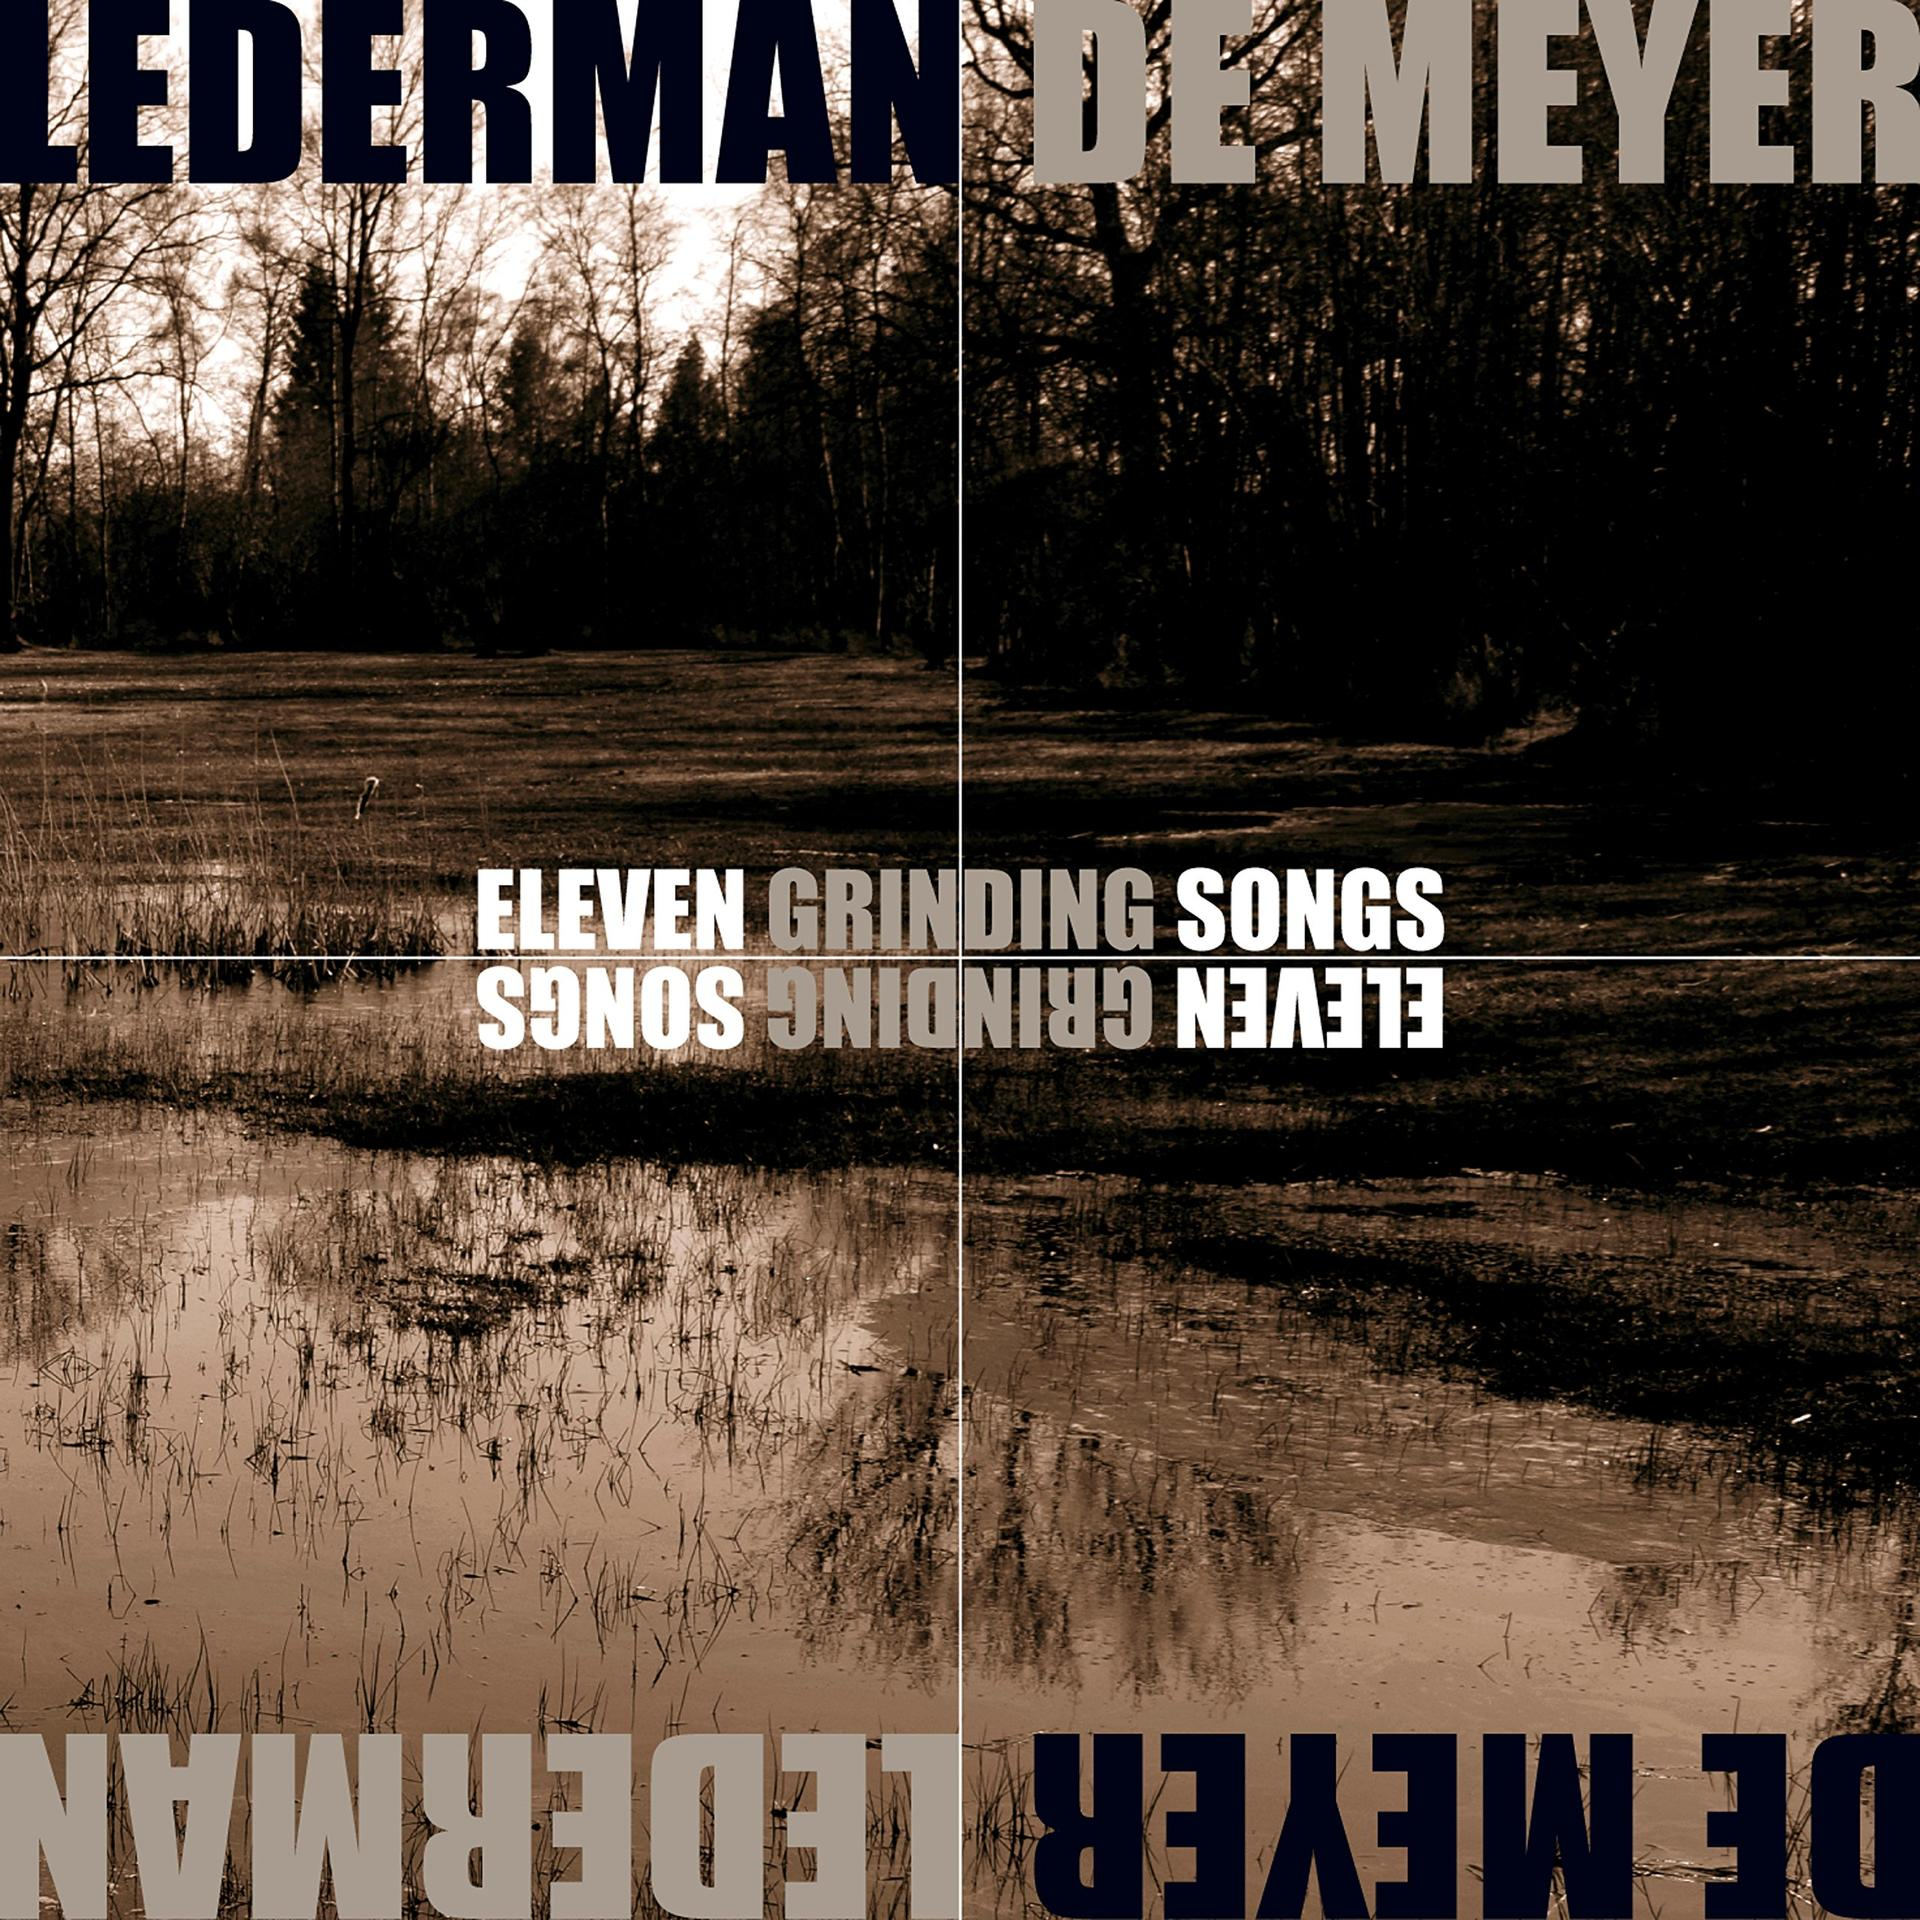 (CD) Grinding Eleven (Limited) Lederman-de Songs - - Meyer